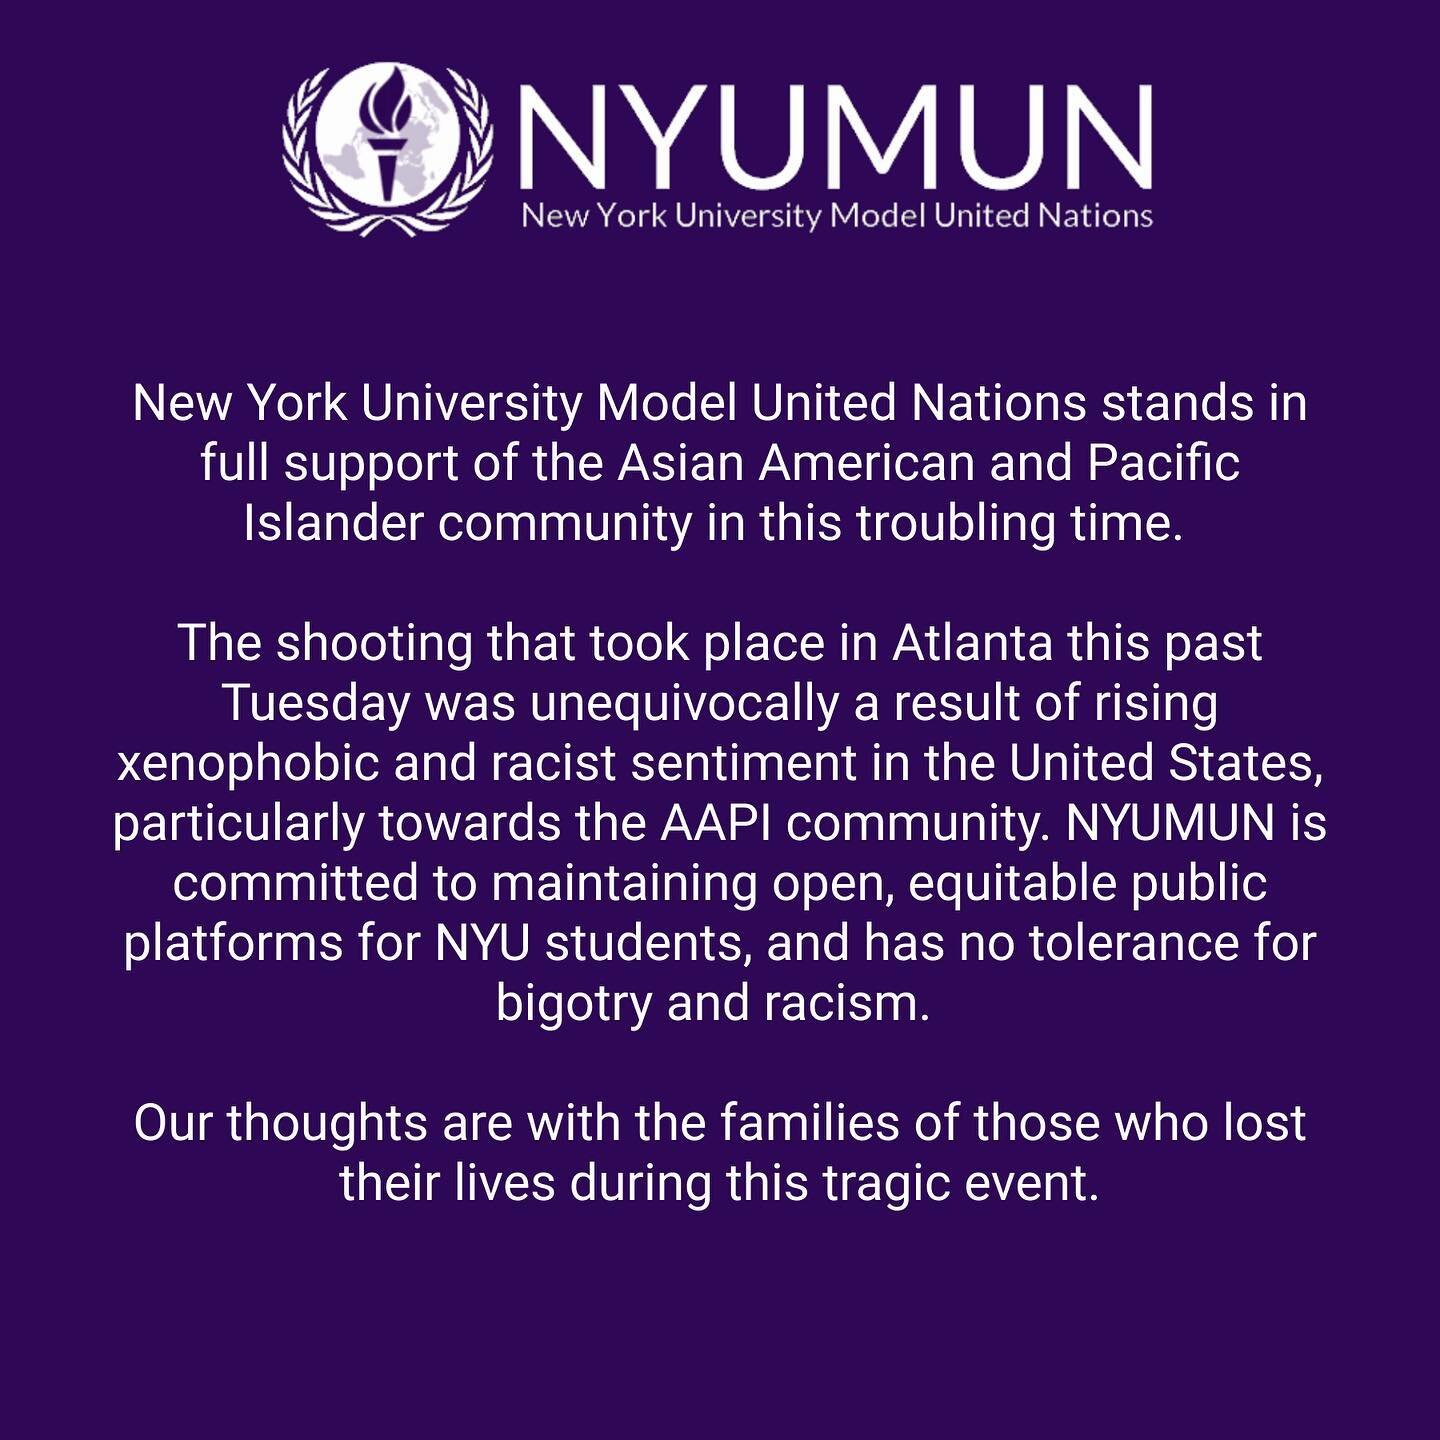 NYUMUN stands with the AAPI community. 
https://linktr.ee/nyu.mun